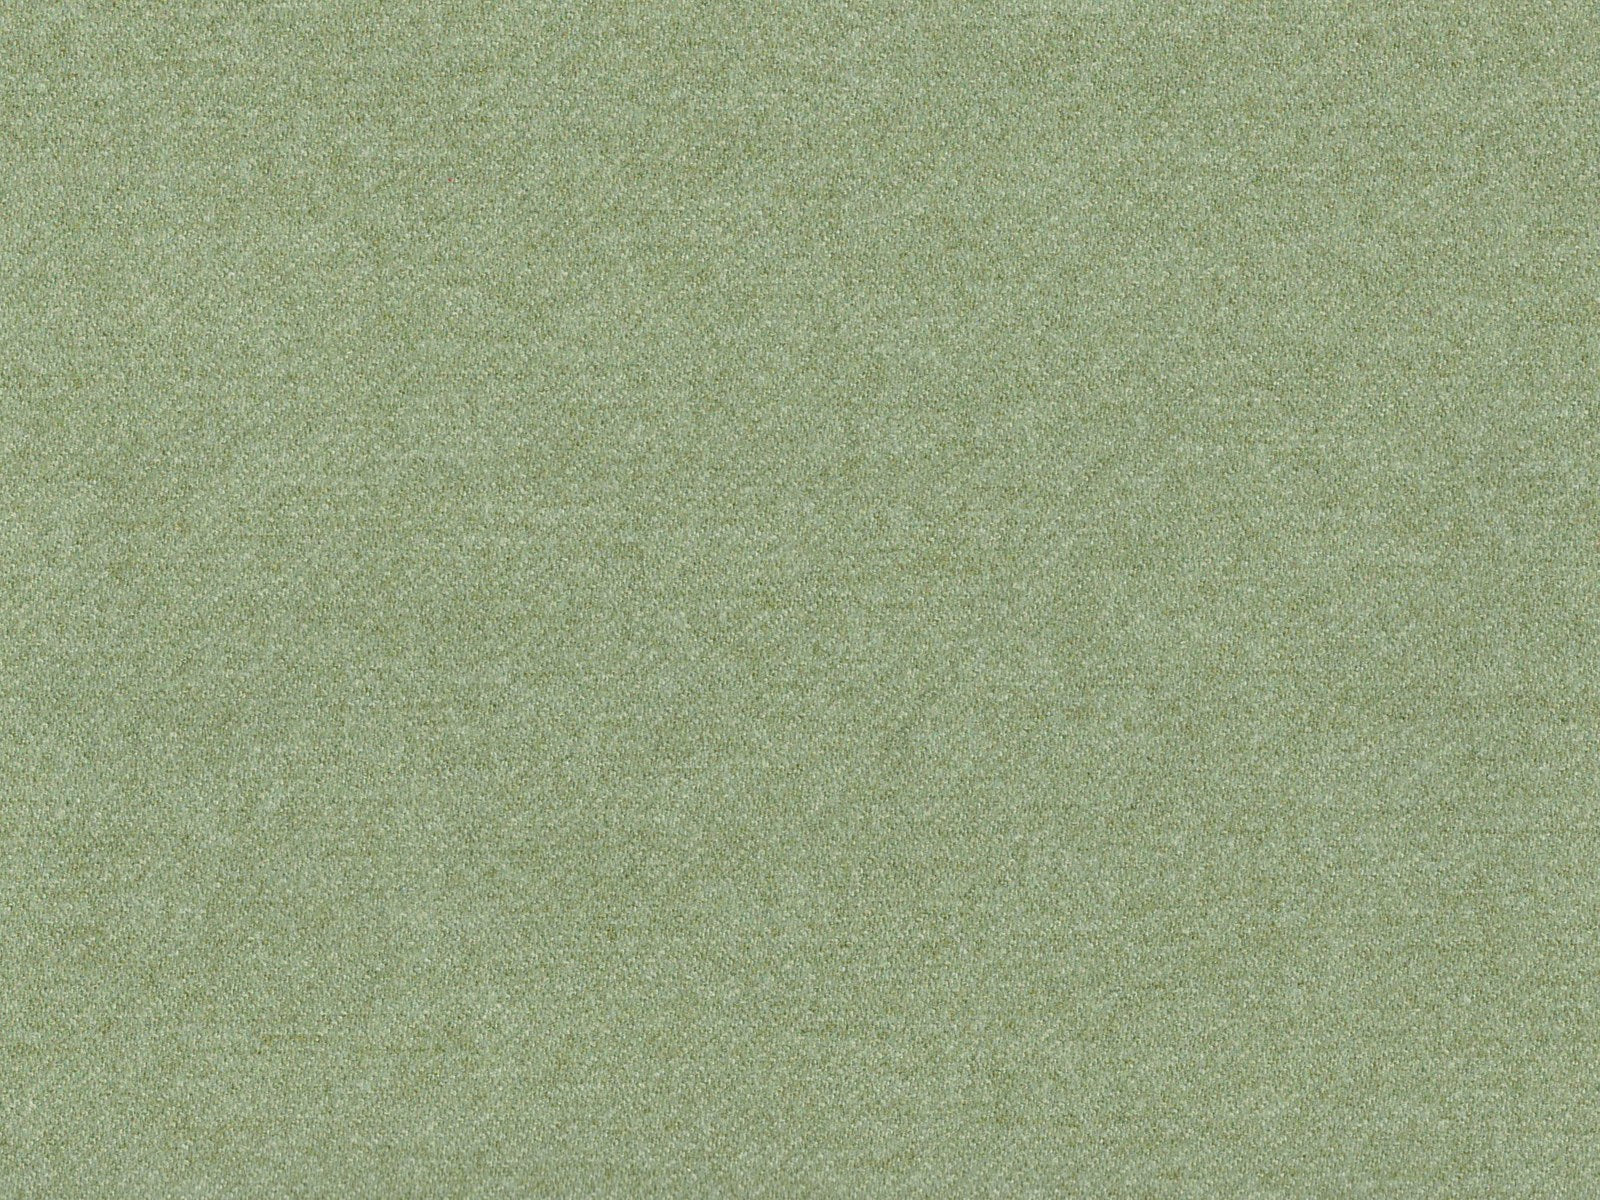 Sonata Fabric Samples - Rydan Interiors